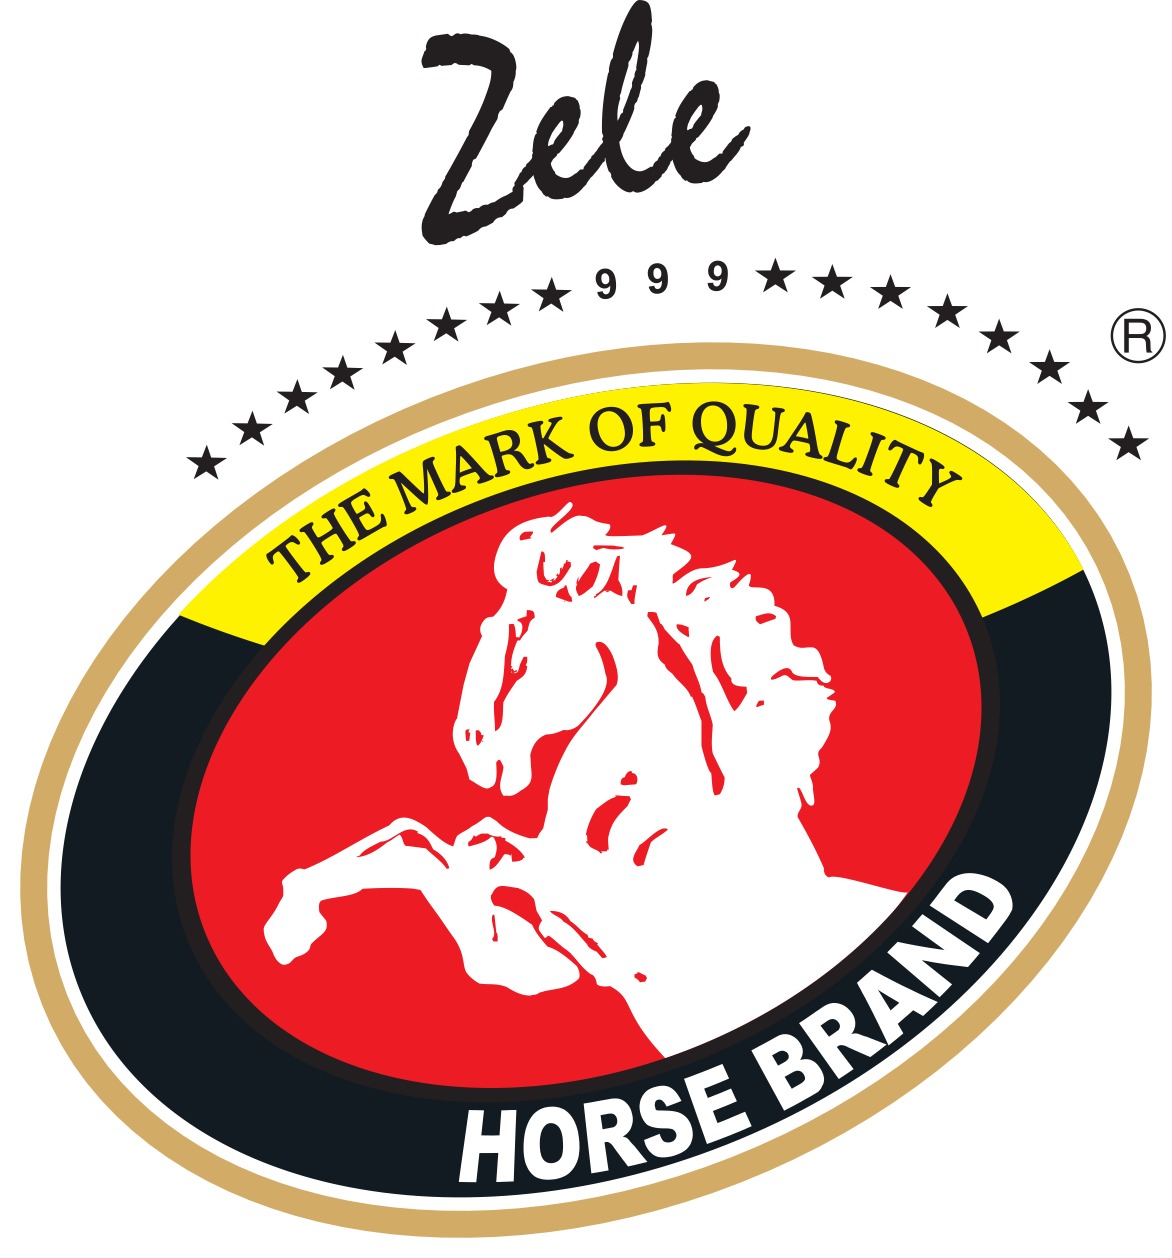 Horse Brand